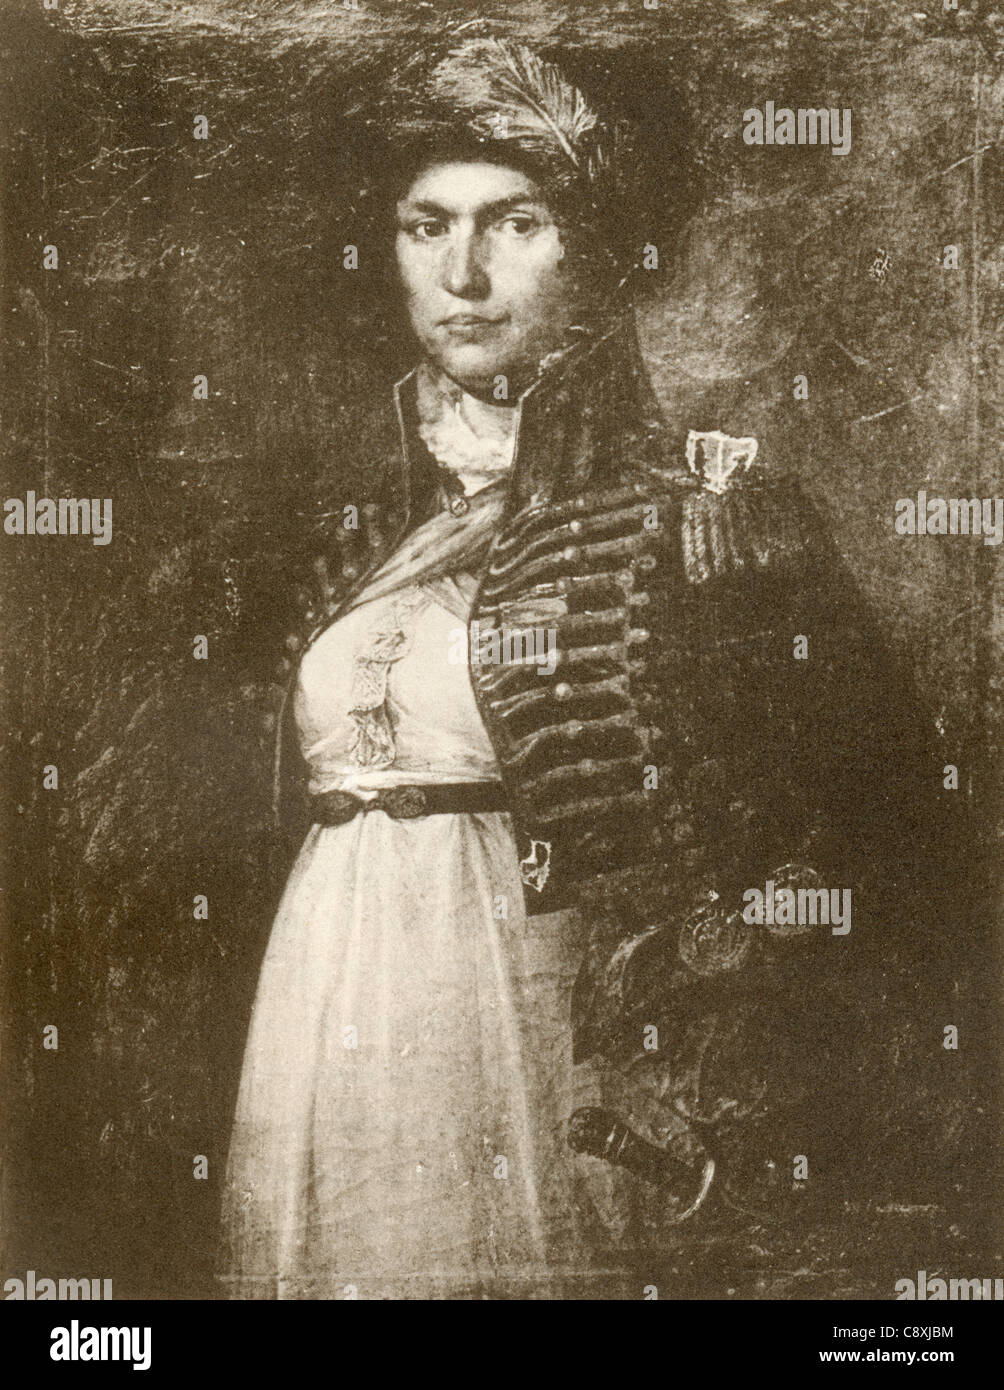 Agustina Raimunda María Saragossa i Domènech, aka Agustina de Aragón, 1786 - 1857. Spanisch Heldin in Belagerung von Saragossa, 1808. Stockfoto